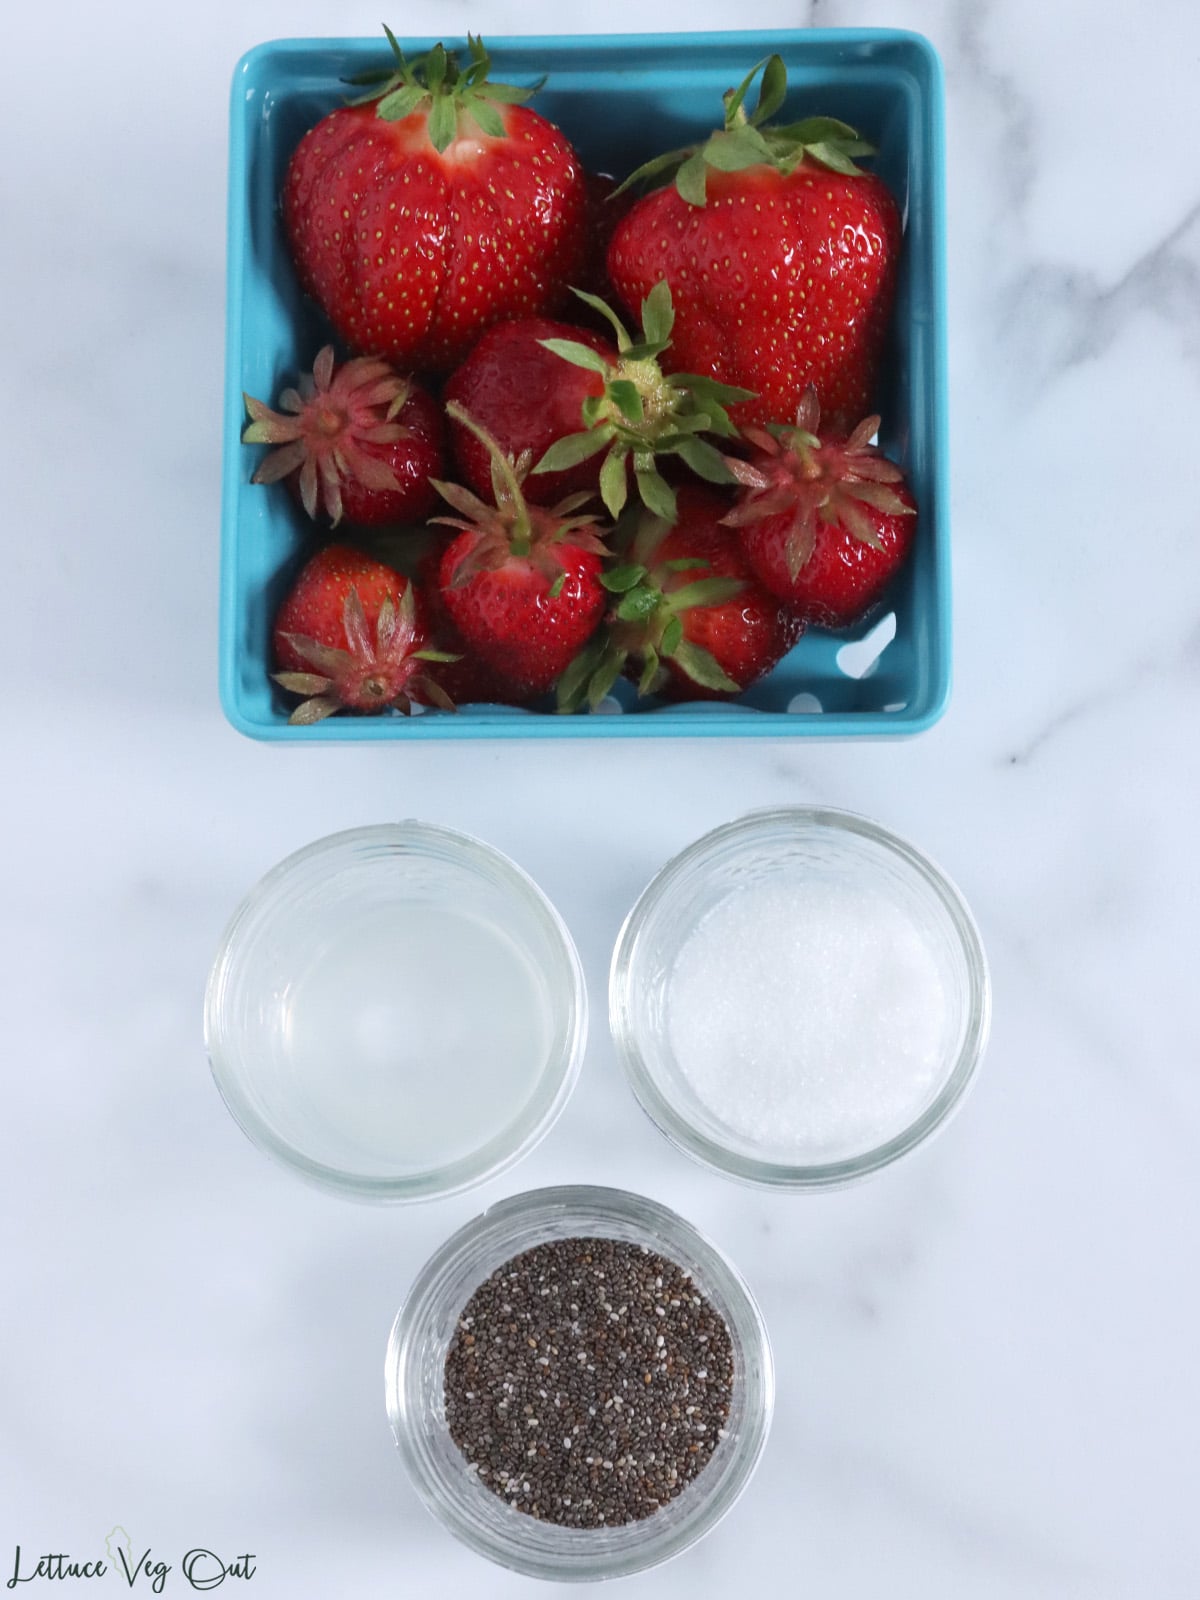 Ingredients for vegan strawberry jam (strawberries, sugar, lemon juice, chia seeds).